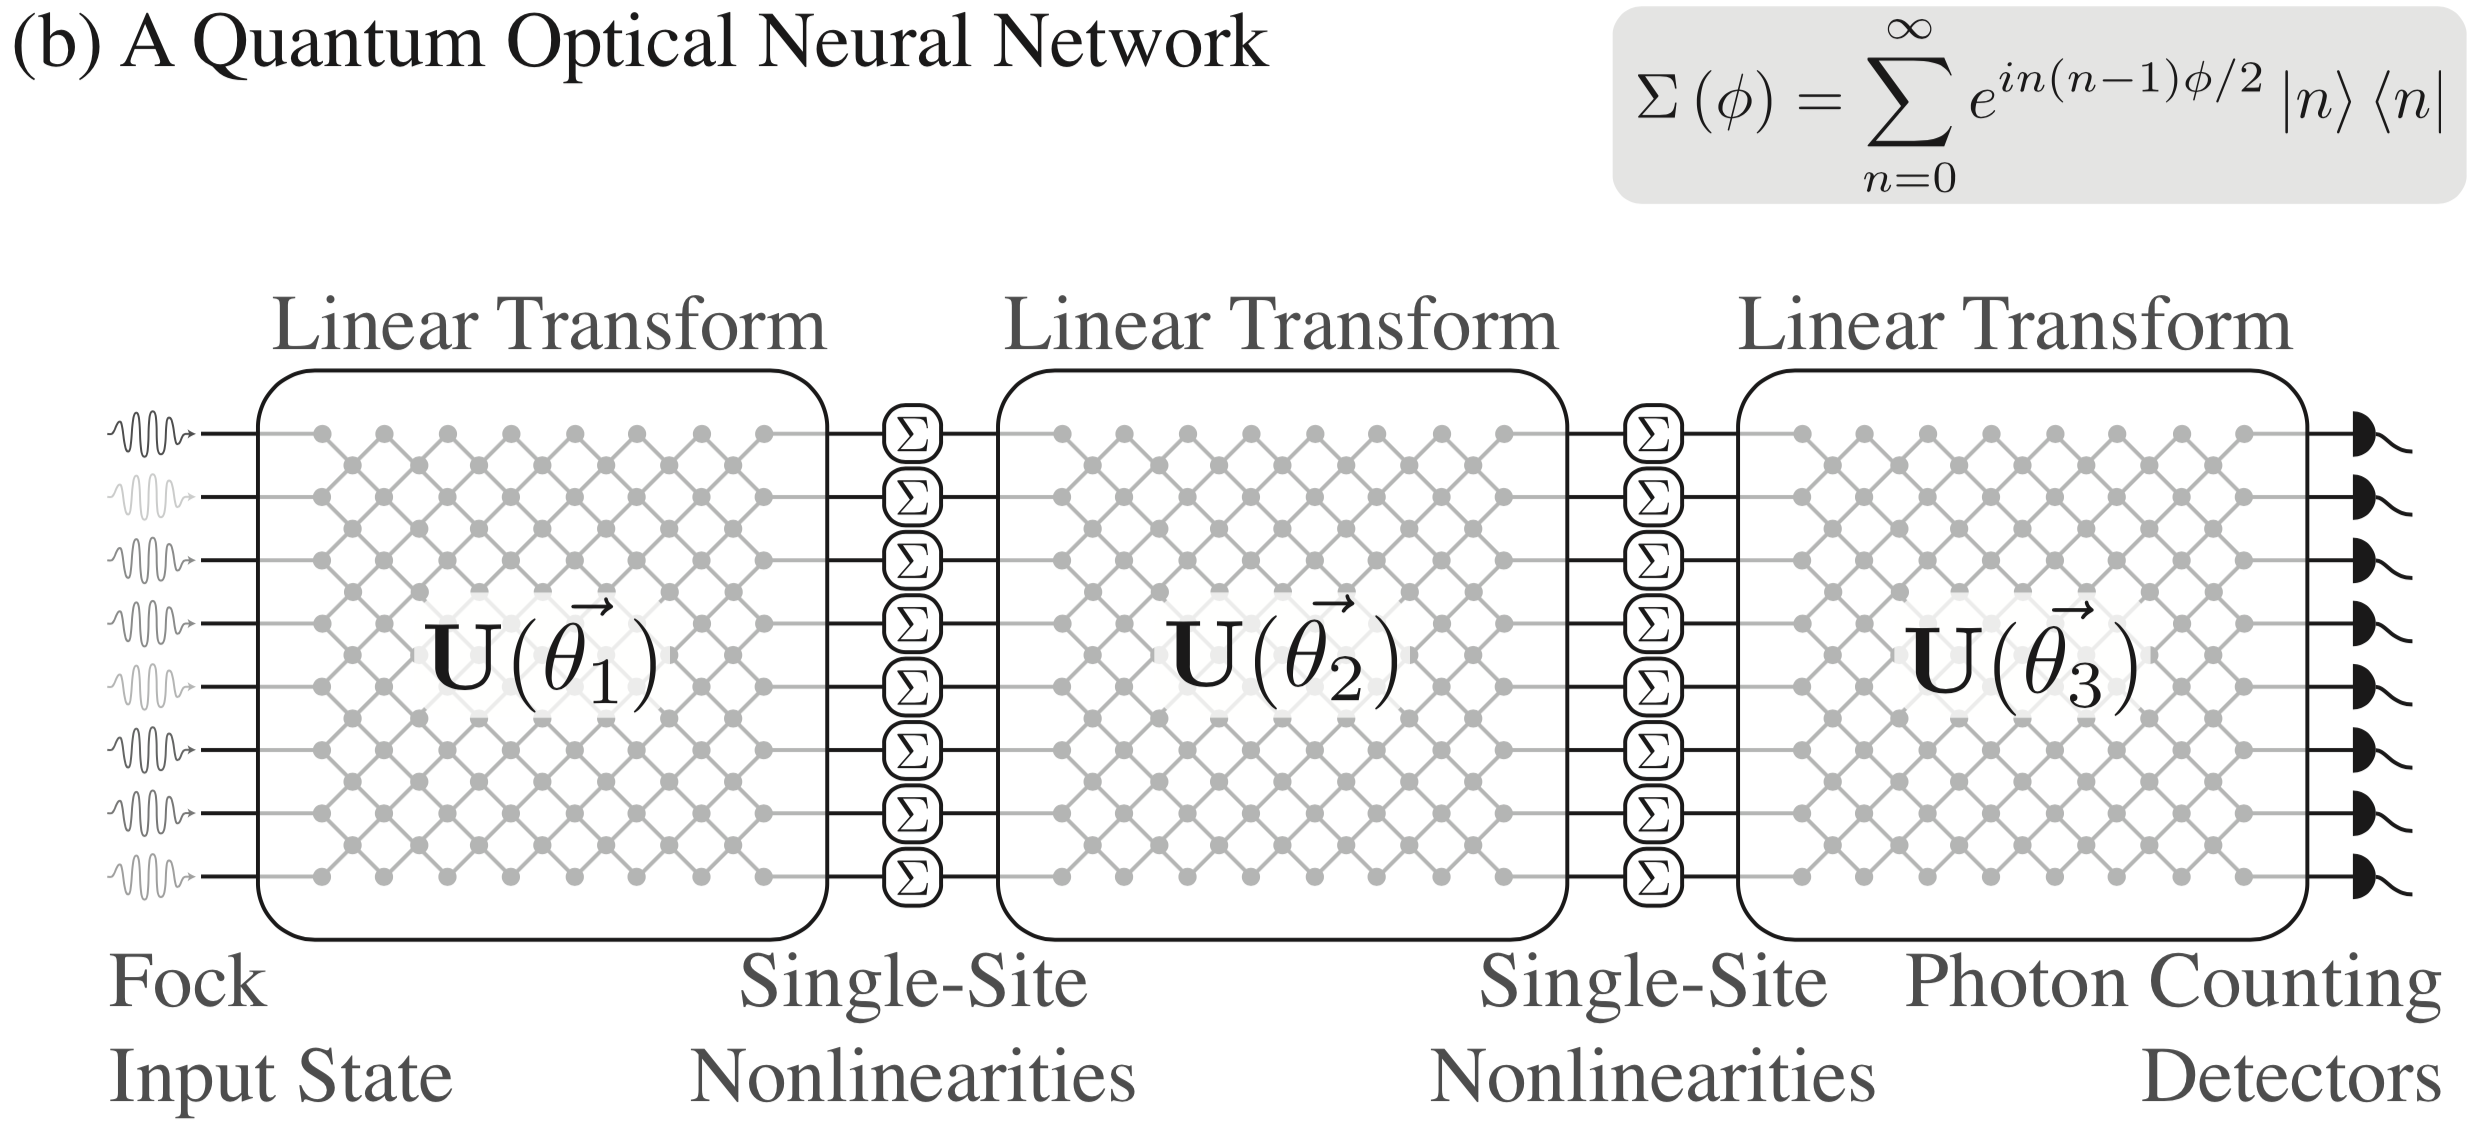 Quantum Optical Neural Network Architecture